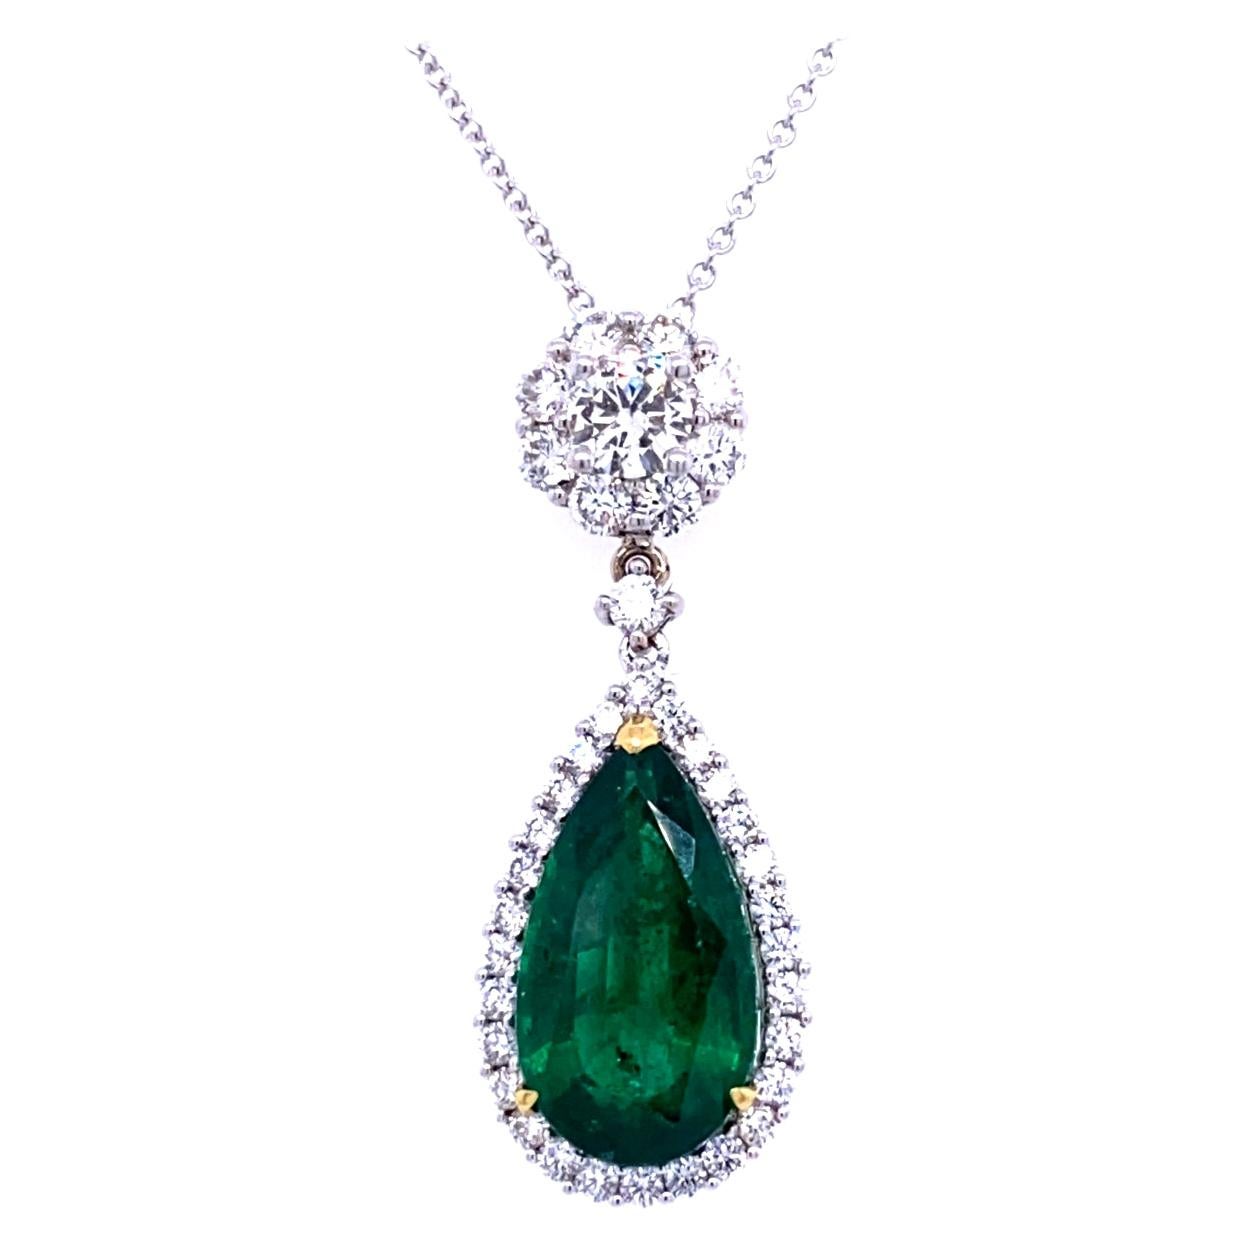 7.00 Carat Pear Shape Emerald Pendant in 18K Gold with 1.85 Carat Diamonds Halo